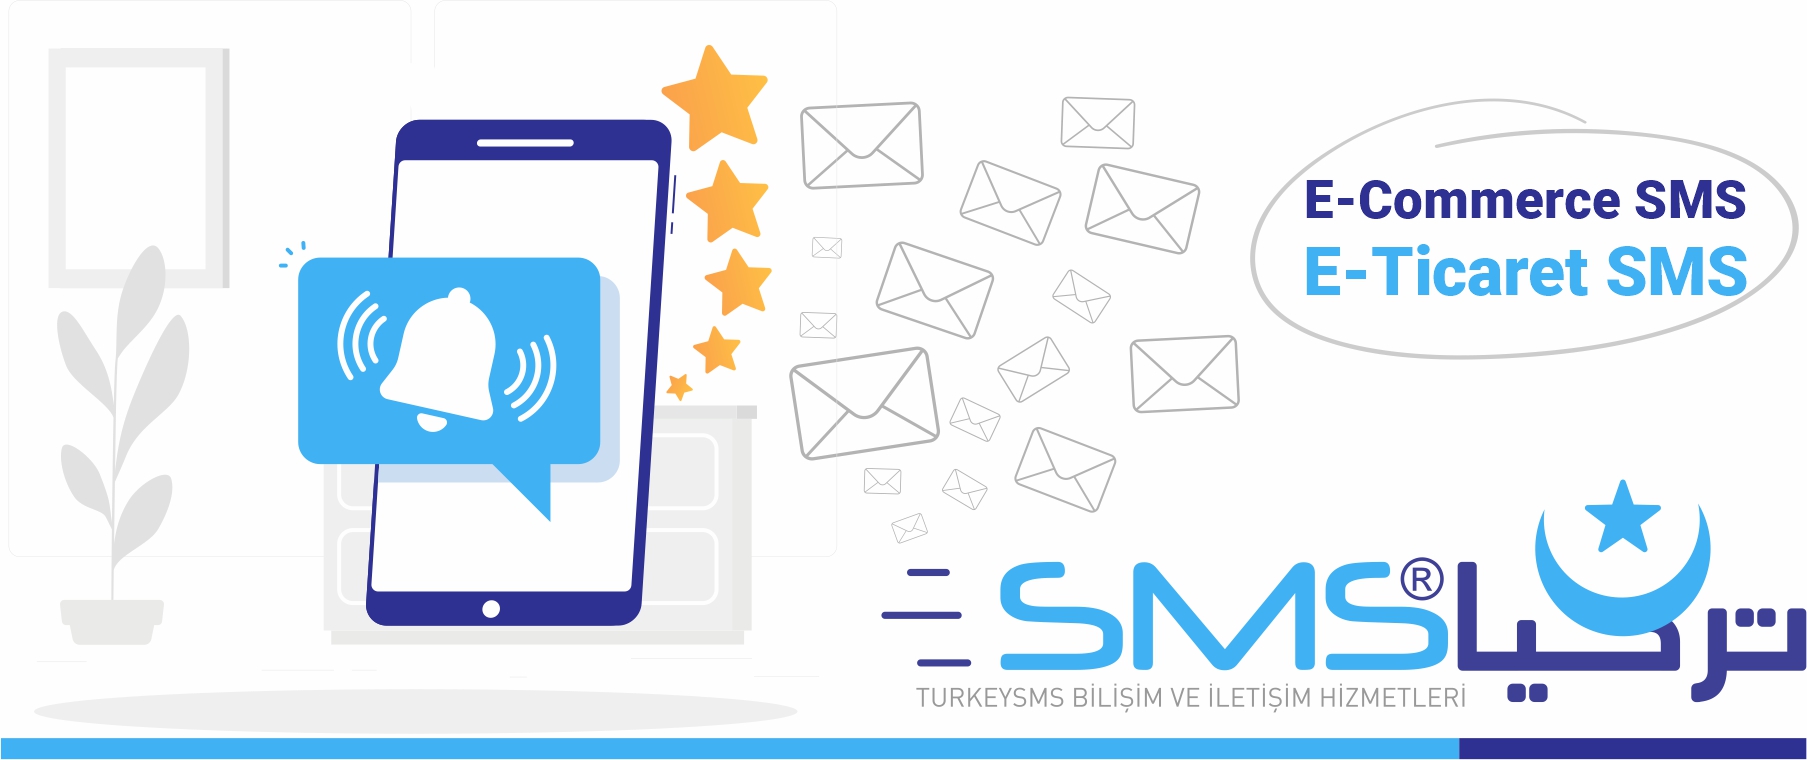 E-Commerce SMS